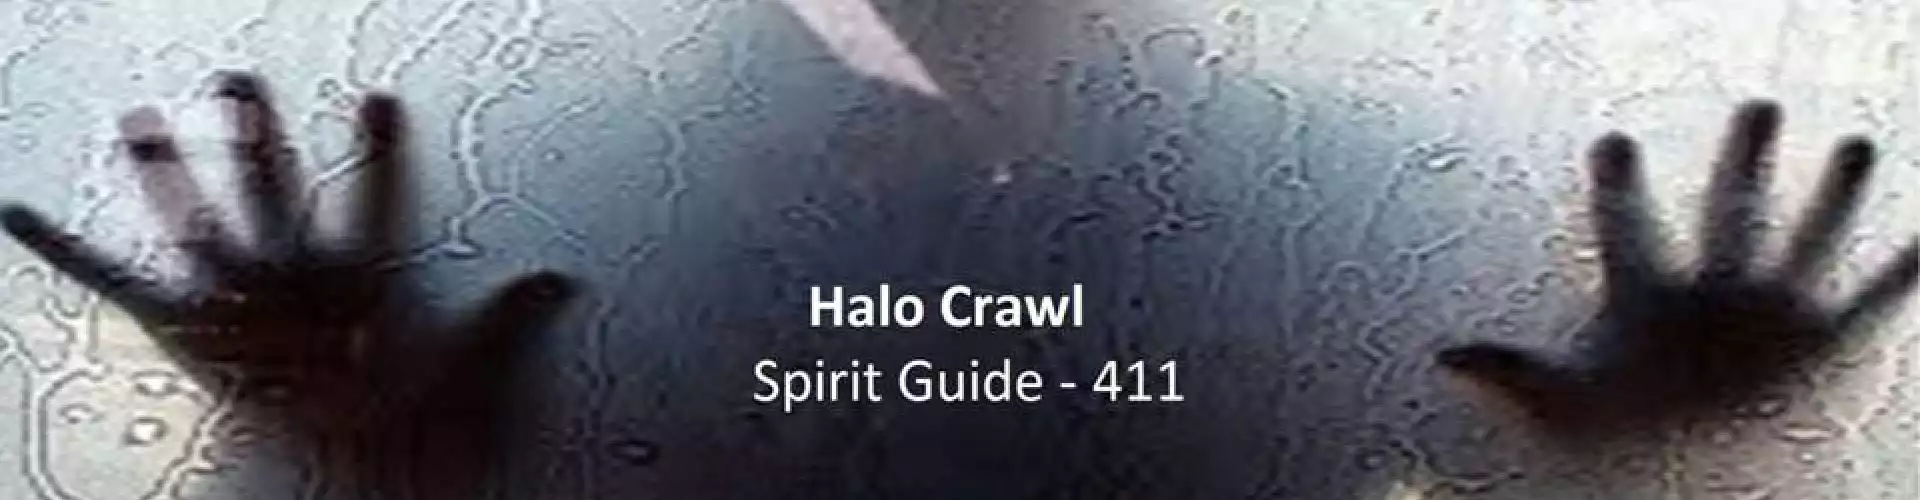 Halo Crawl - Spirit Guide 411 (Zenith School of Metaphysical Studies)